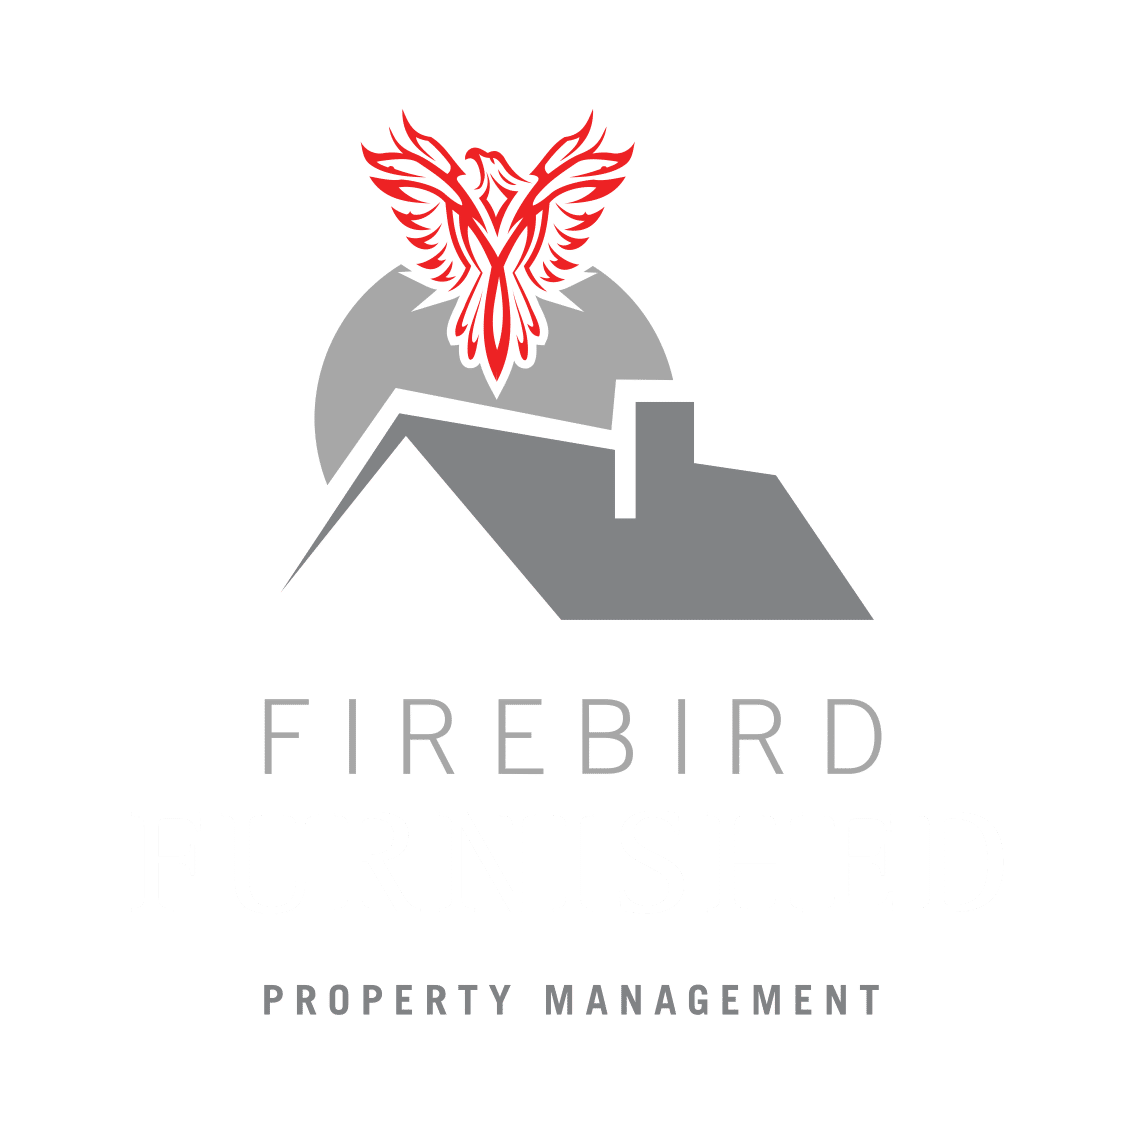 Firebird Furnished Property Management